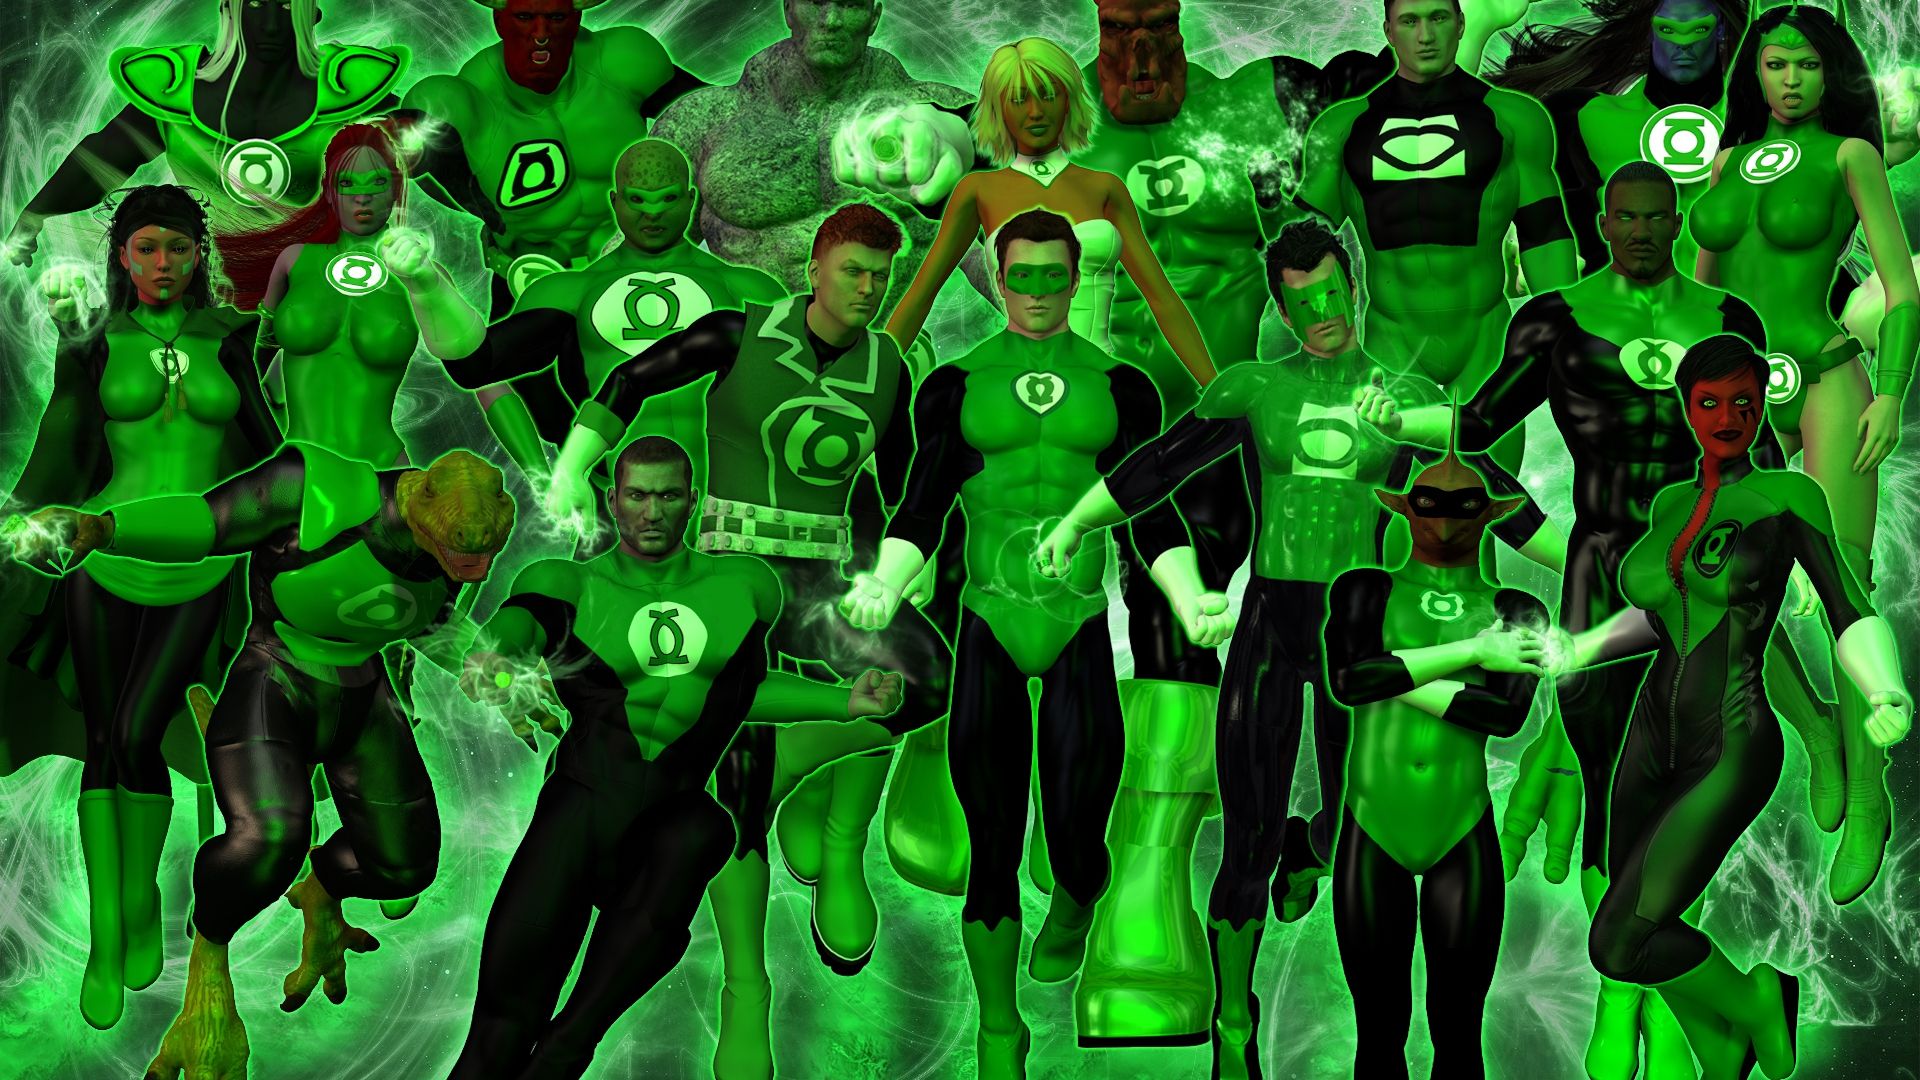 Free download Green Lantern Corps Wallpaper The green lantern